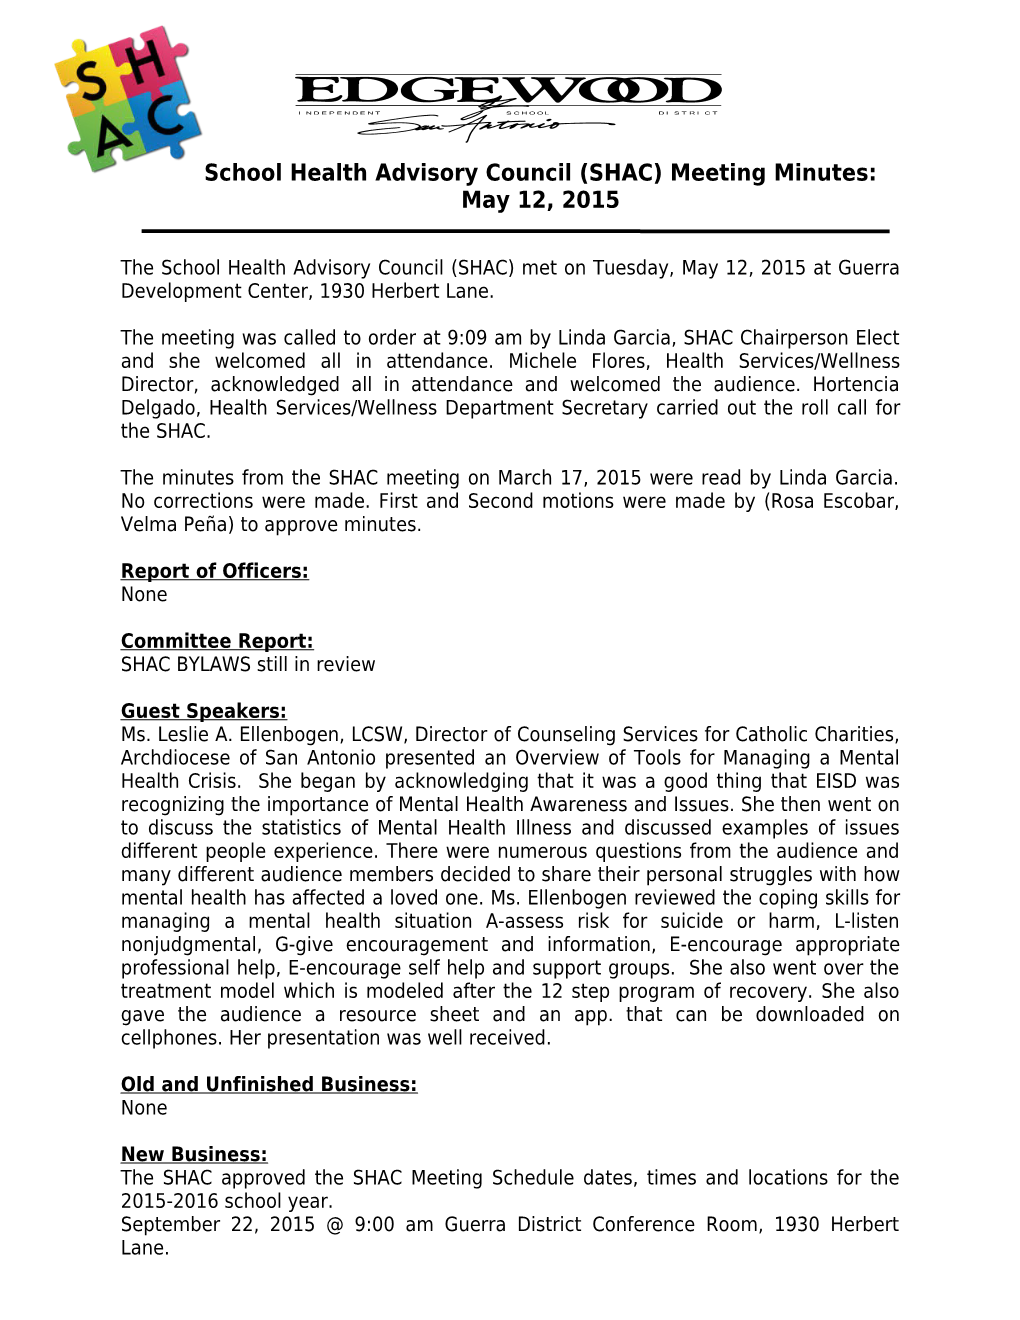 School Health Advisory Council (SHAC) Meeting Minutes: May 12, 2015